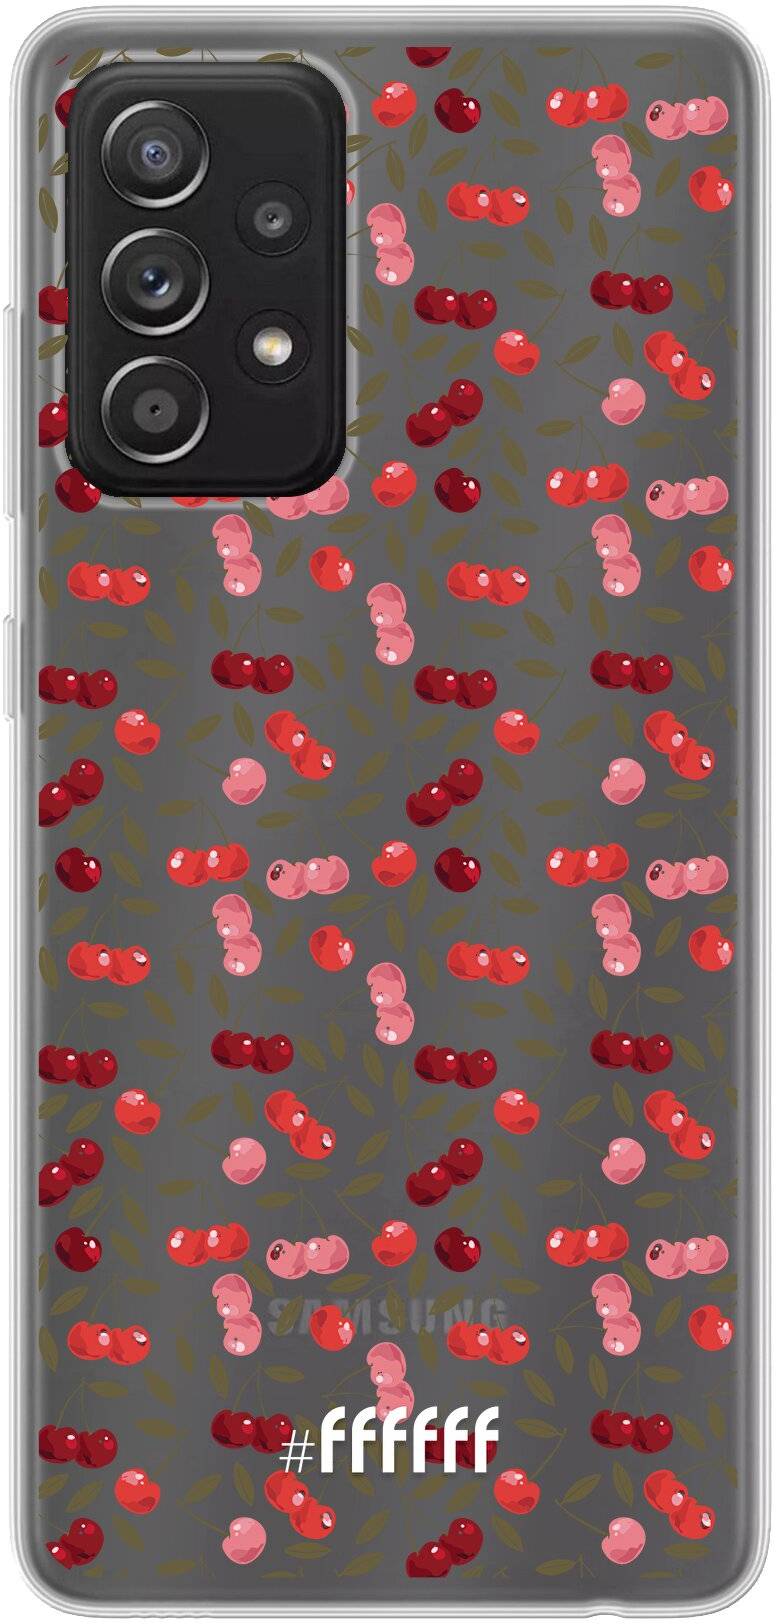 Cherry's Galaxy A52